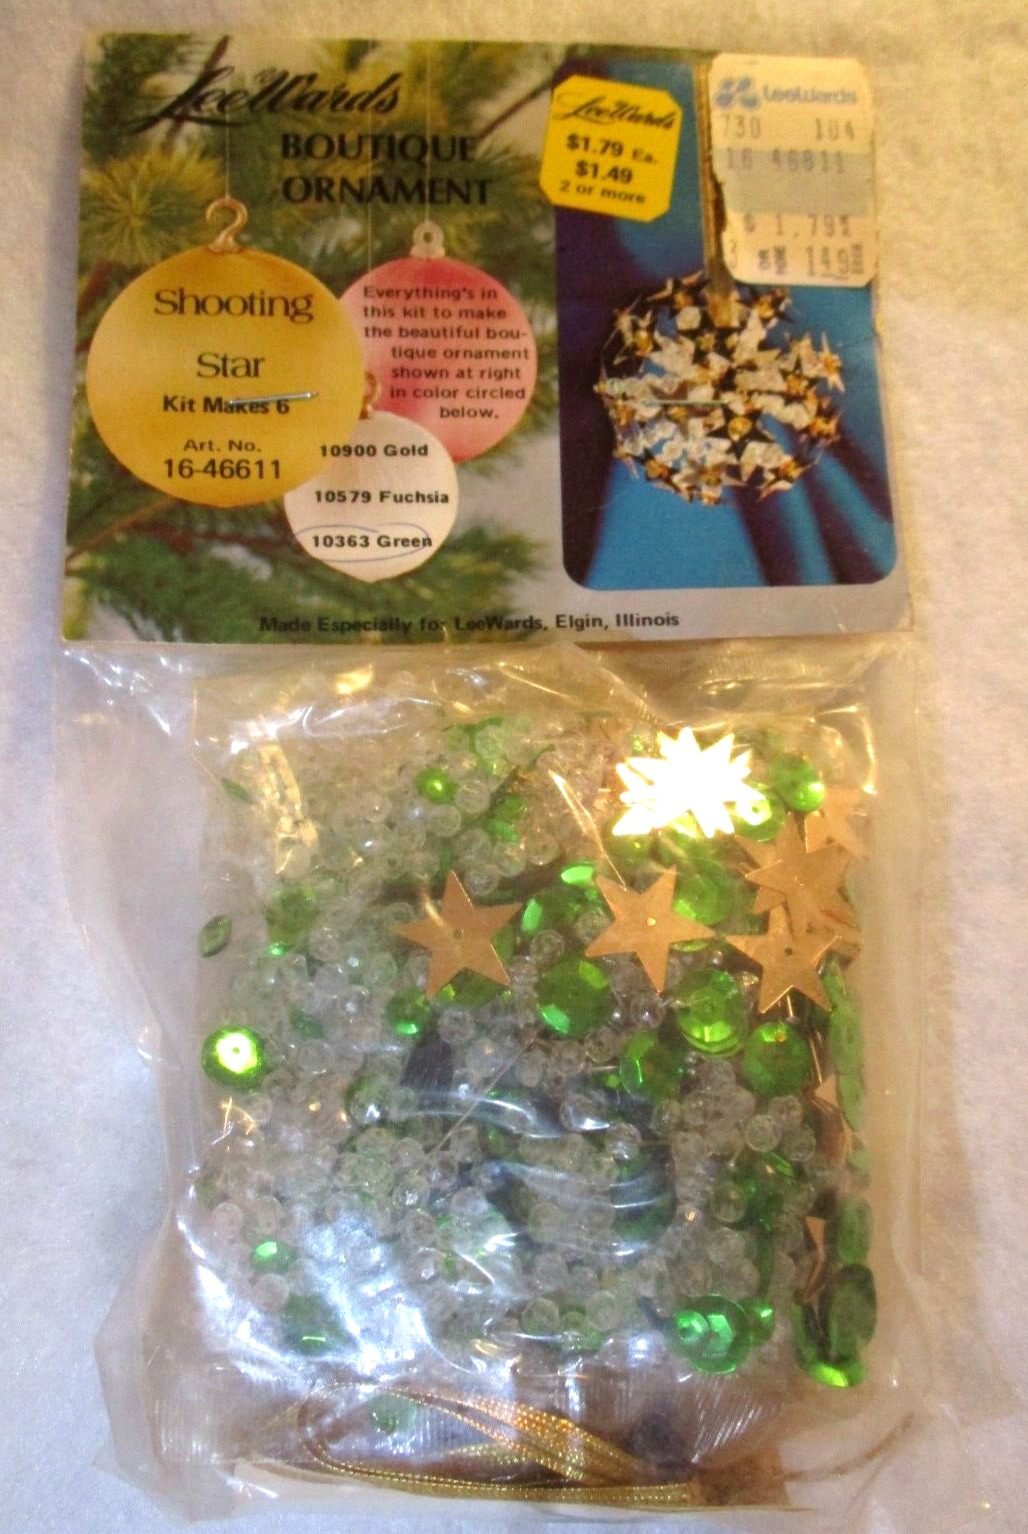 Vintage Lee Wards Shooting Star Ornament Kit, Makes 6